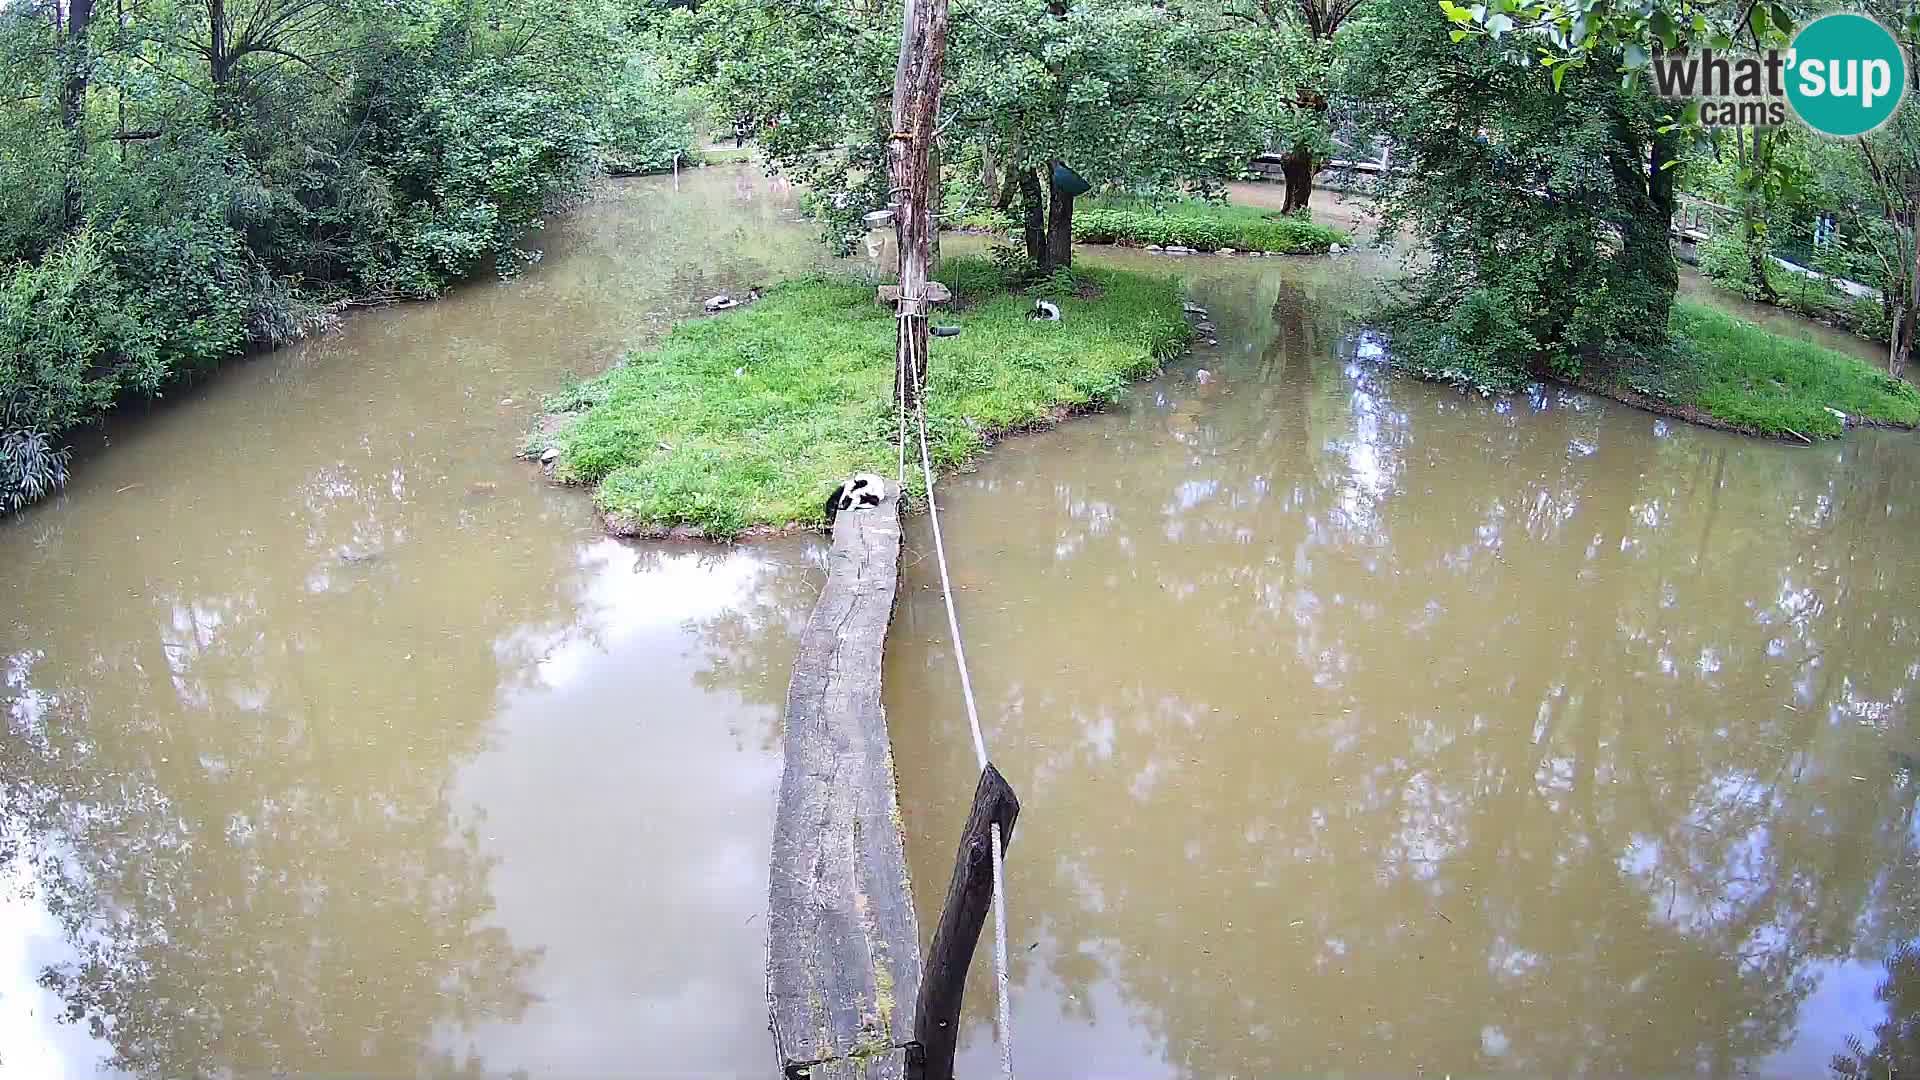 Vari bianconero Zoo Ljubljana webcam